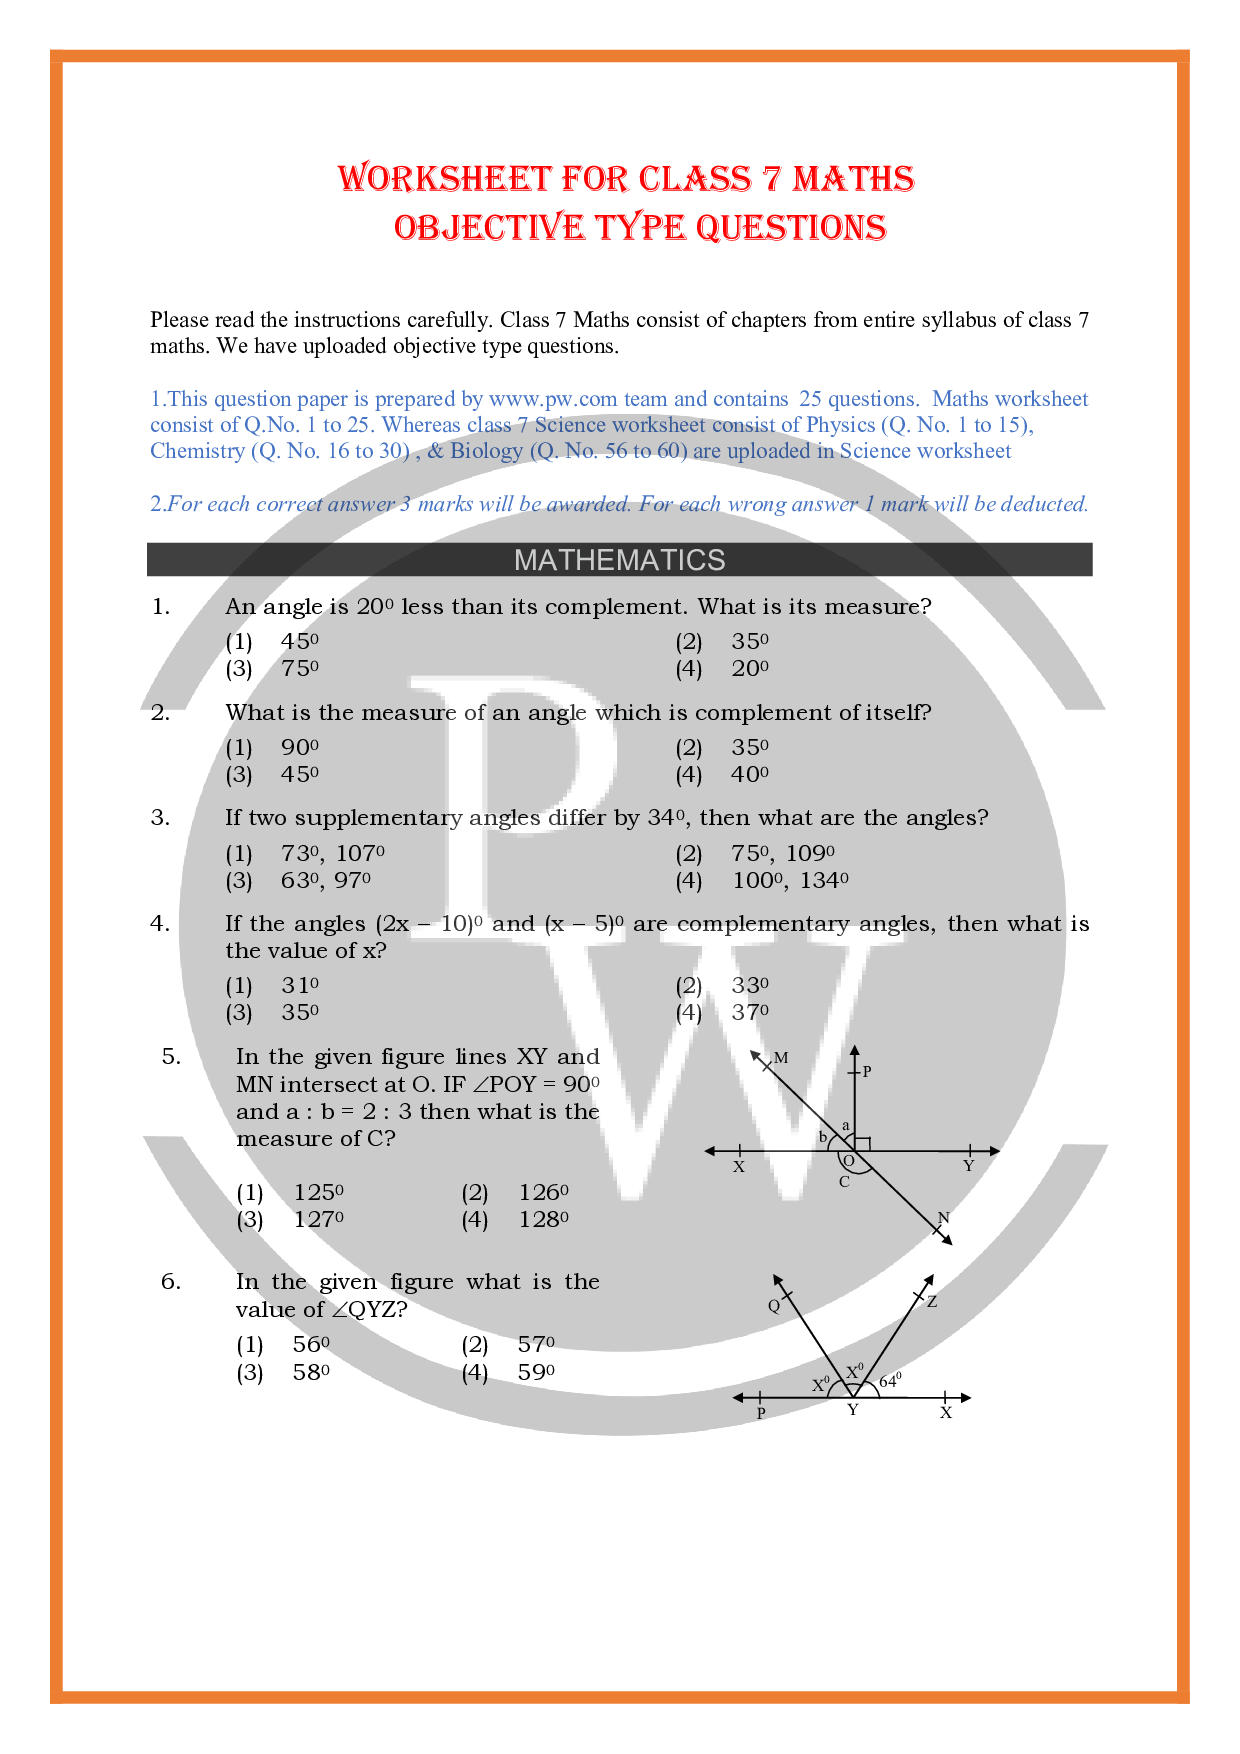 class-7-maths-worksheet-9-with-answer-key-physics-wallah-math-worksheet-answers